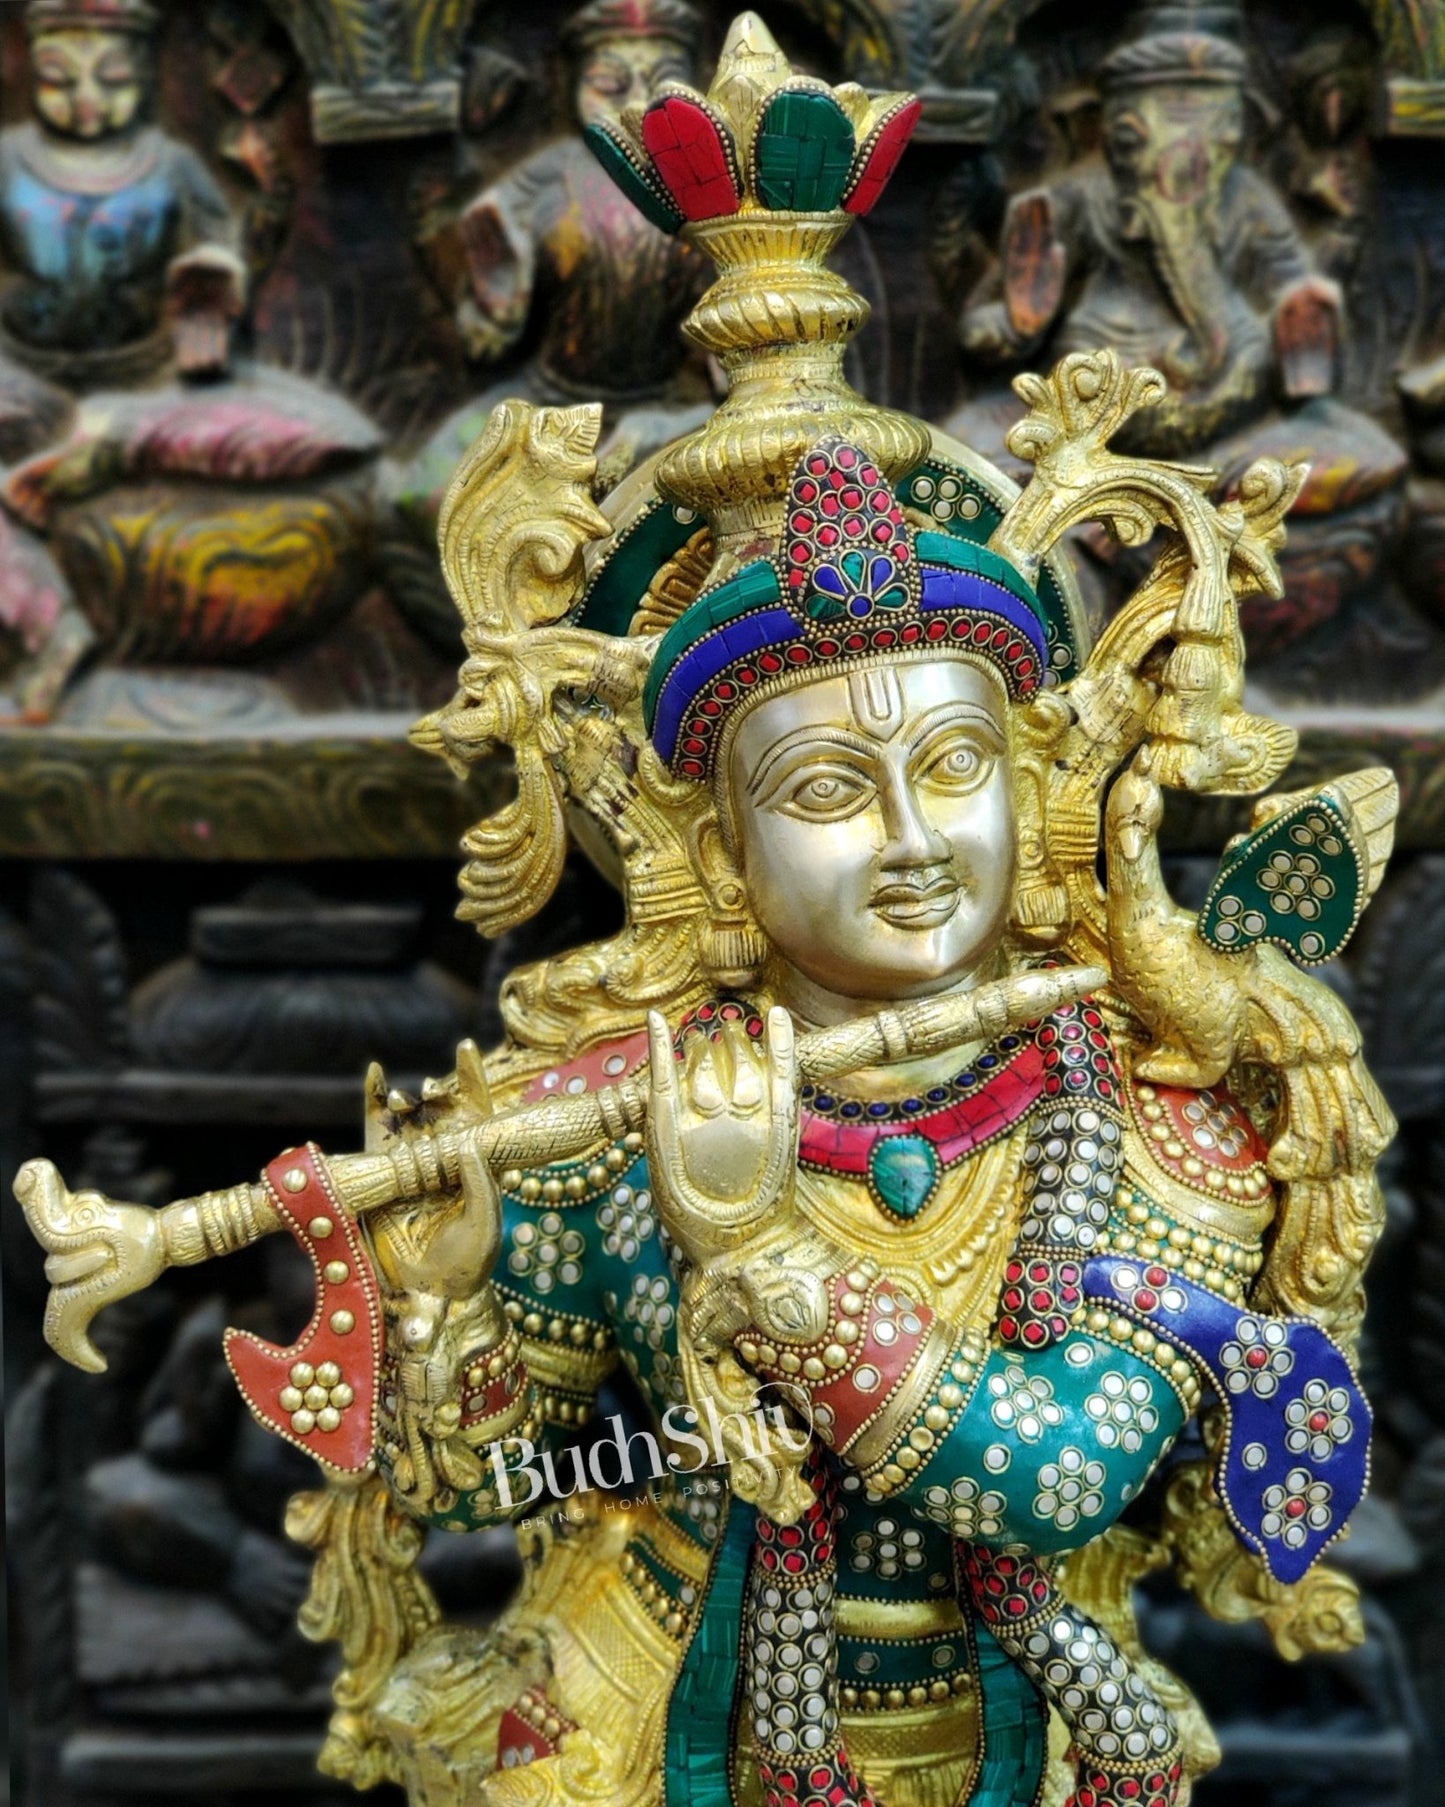 Exquisite Brass Superfine Krishna Statue | Height 36 Inches | Inlay Stonework - Budhshiv.com